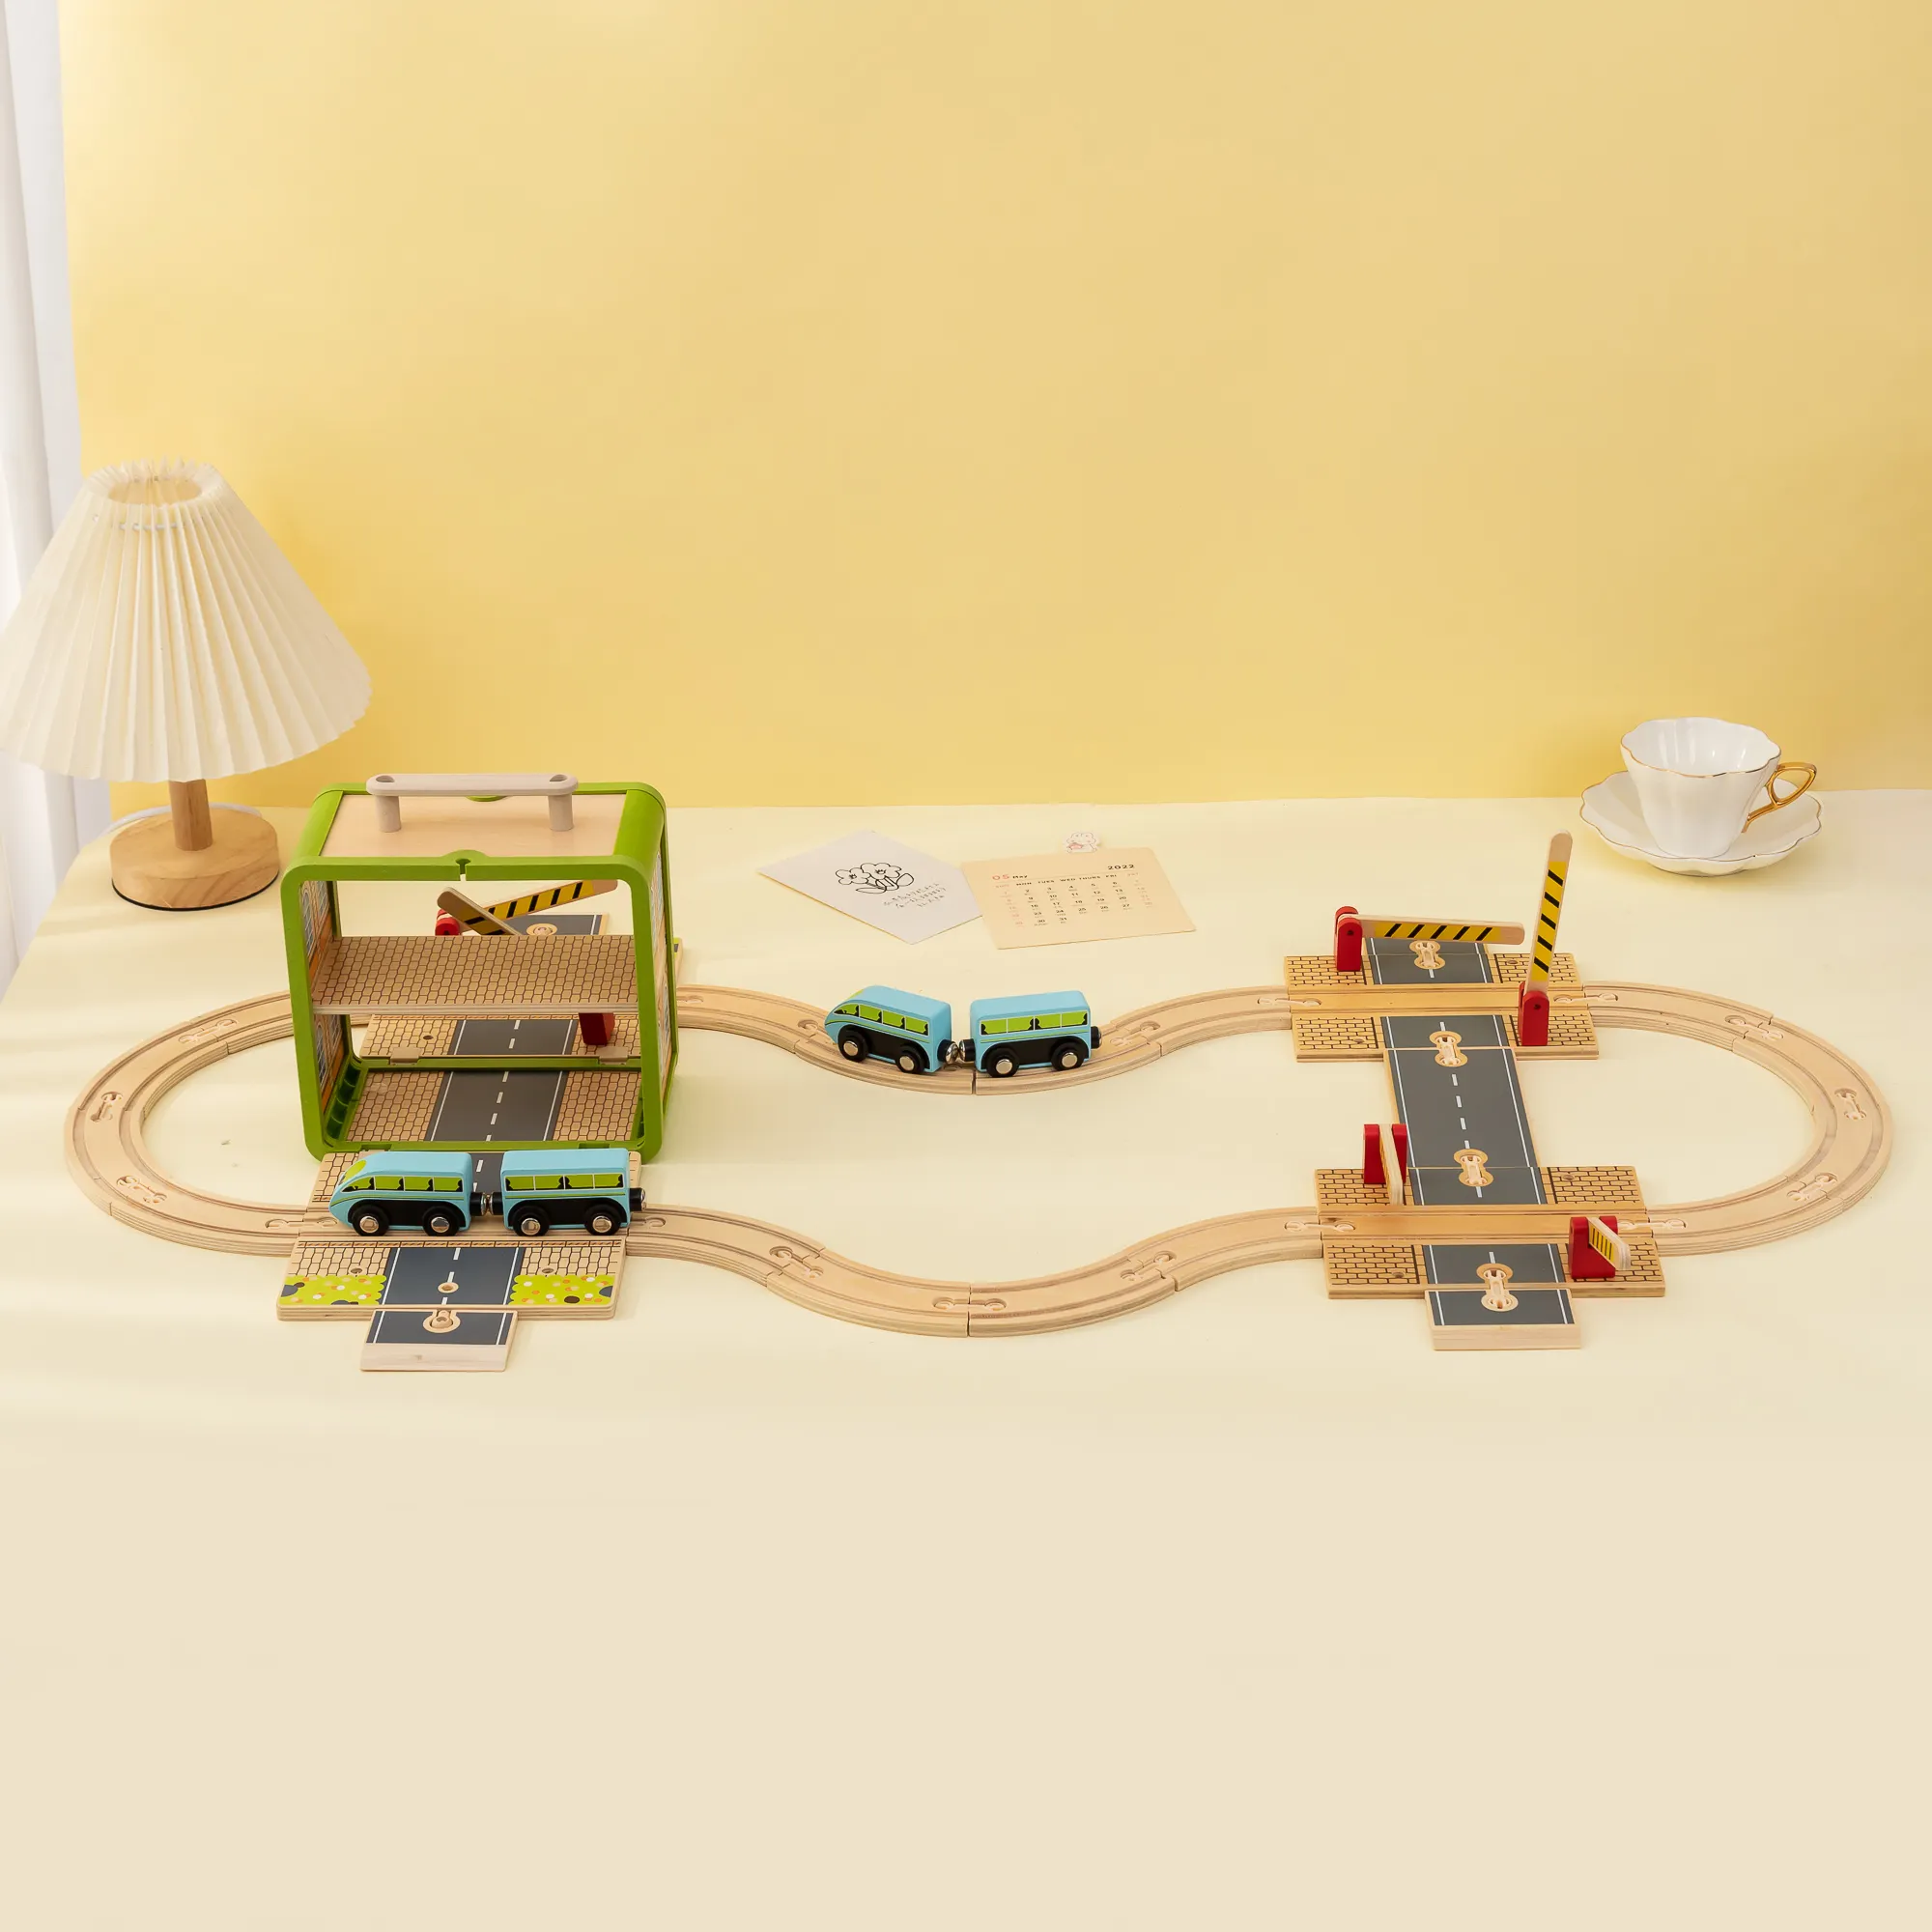 UDEAS OEM Railway Playhouse Car Game Caja almacenable Set Tren de madera Pista de juguete para niños